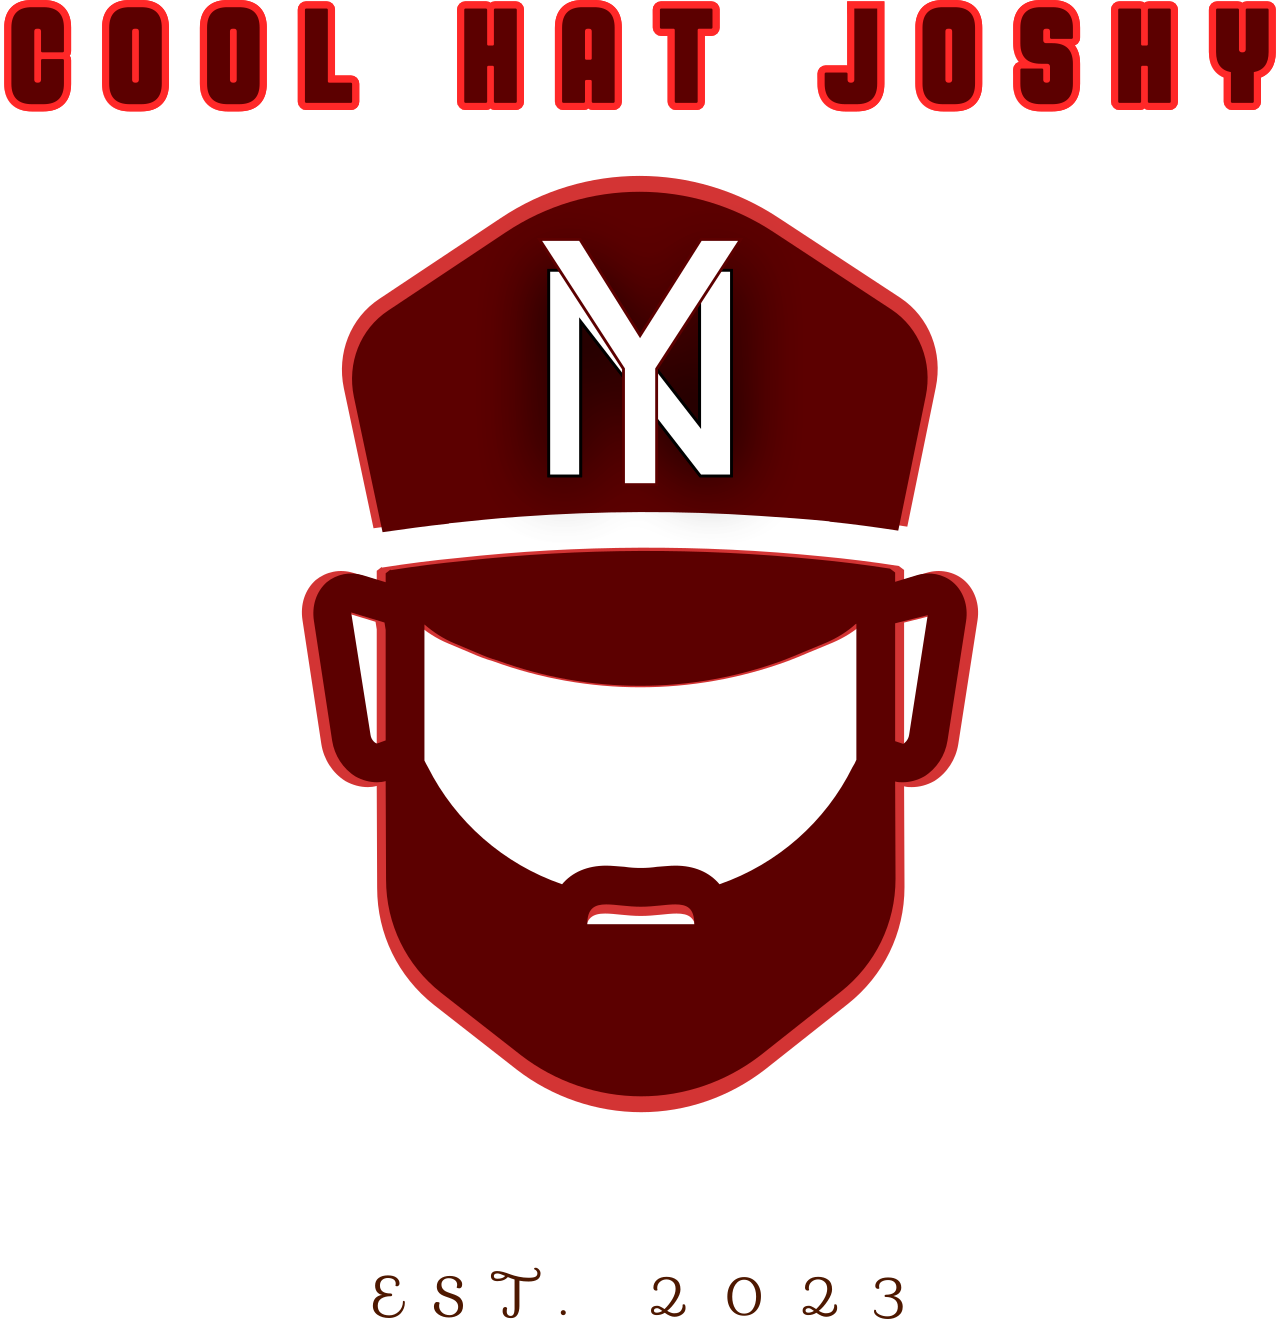 Cool Hat Joshy's web page